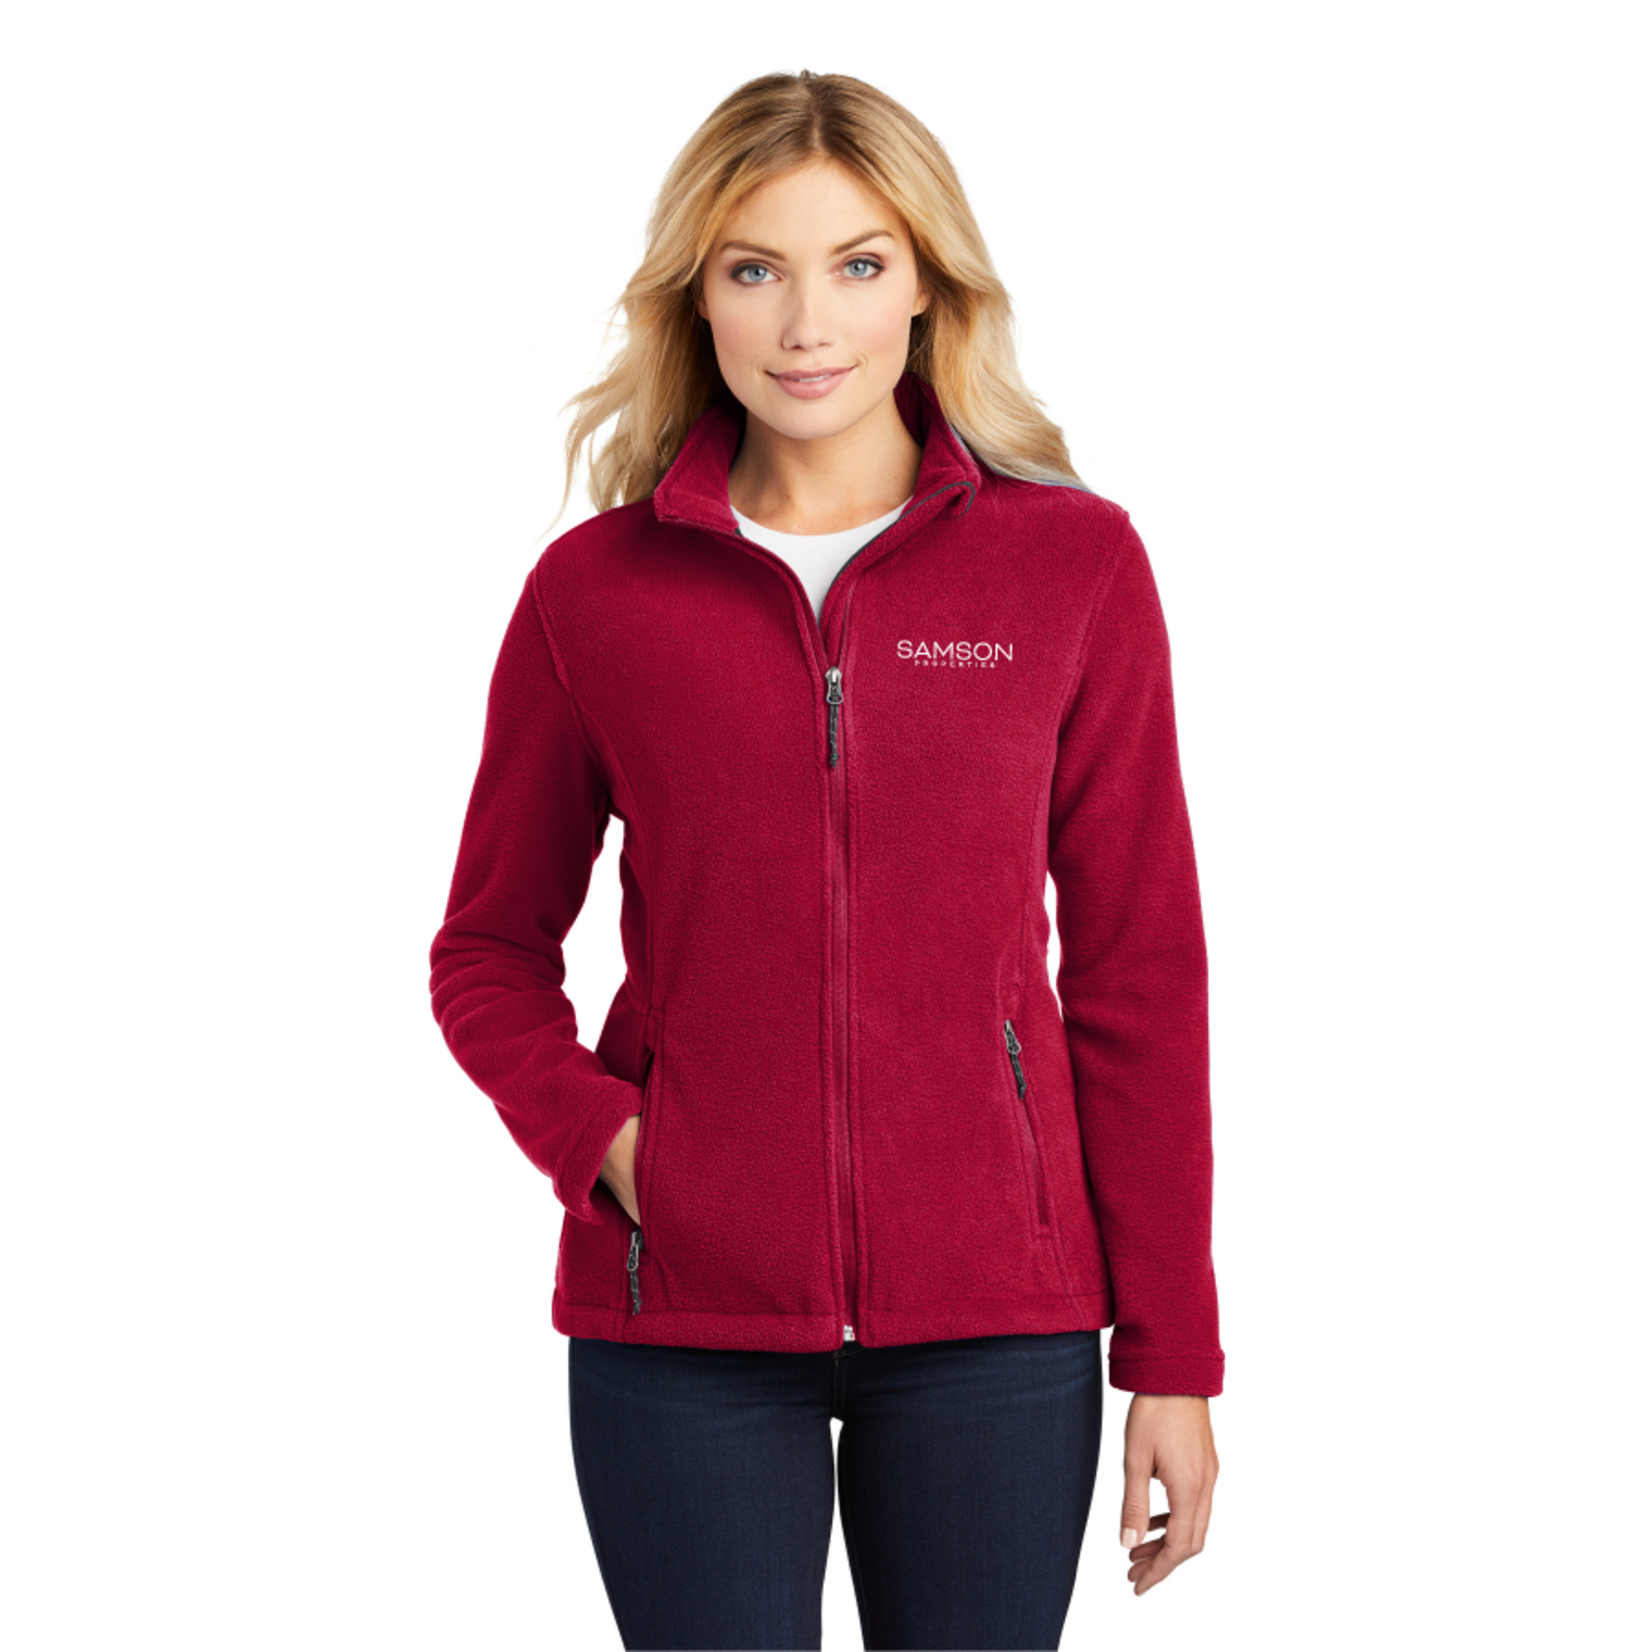 Port Authority Ladies Value Fleece Jacket-XS (Forest Green)